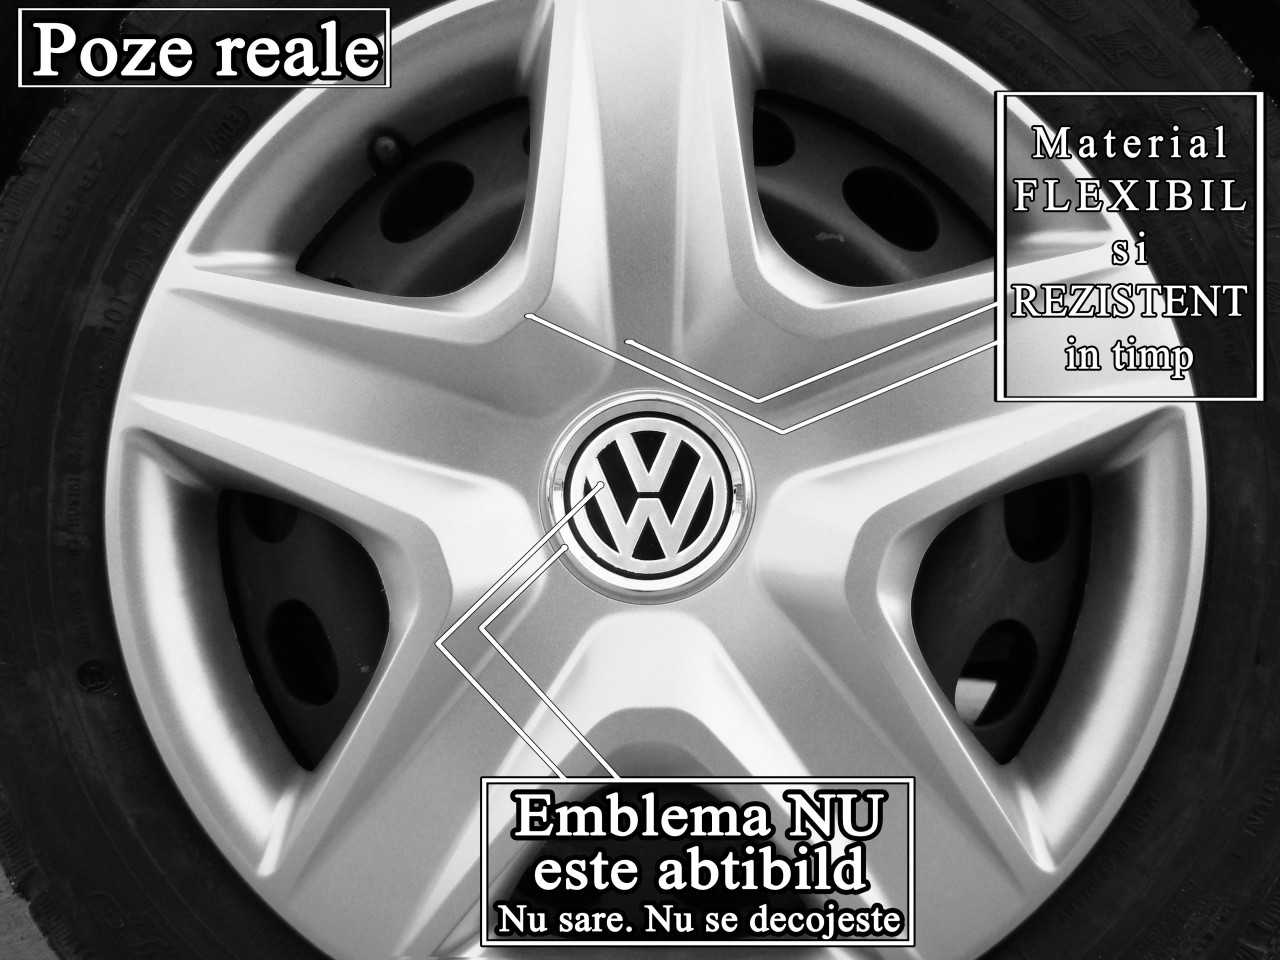 Capace roti 15 VW Volkswagen – Imitatie jante aliaj #48081295